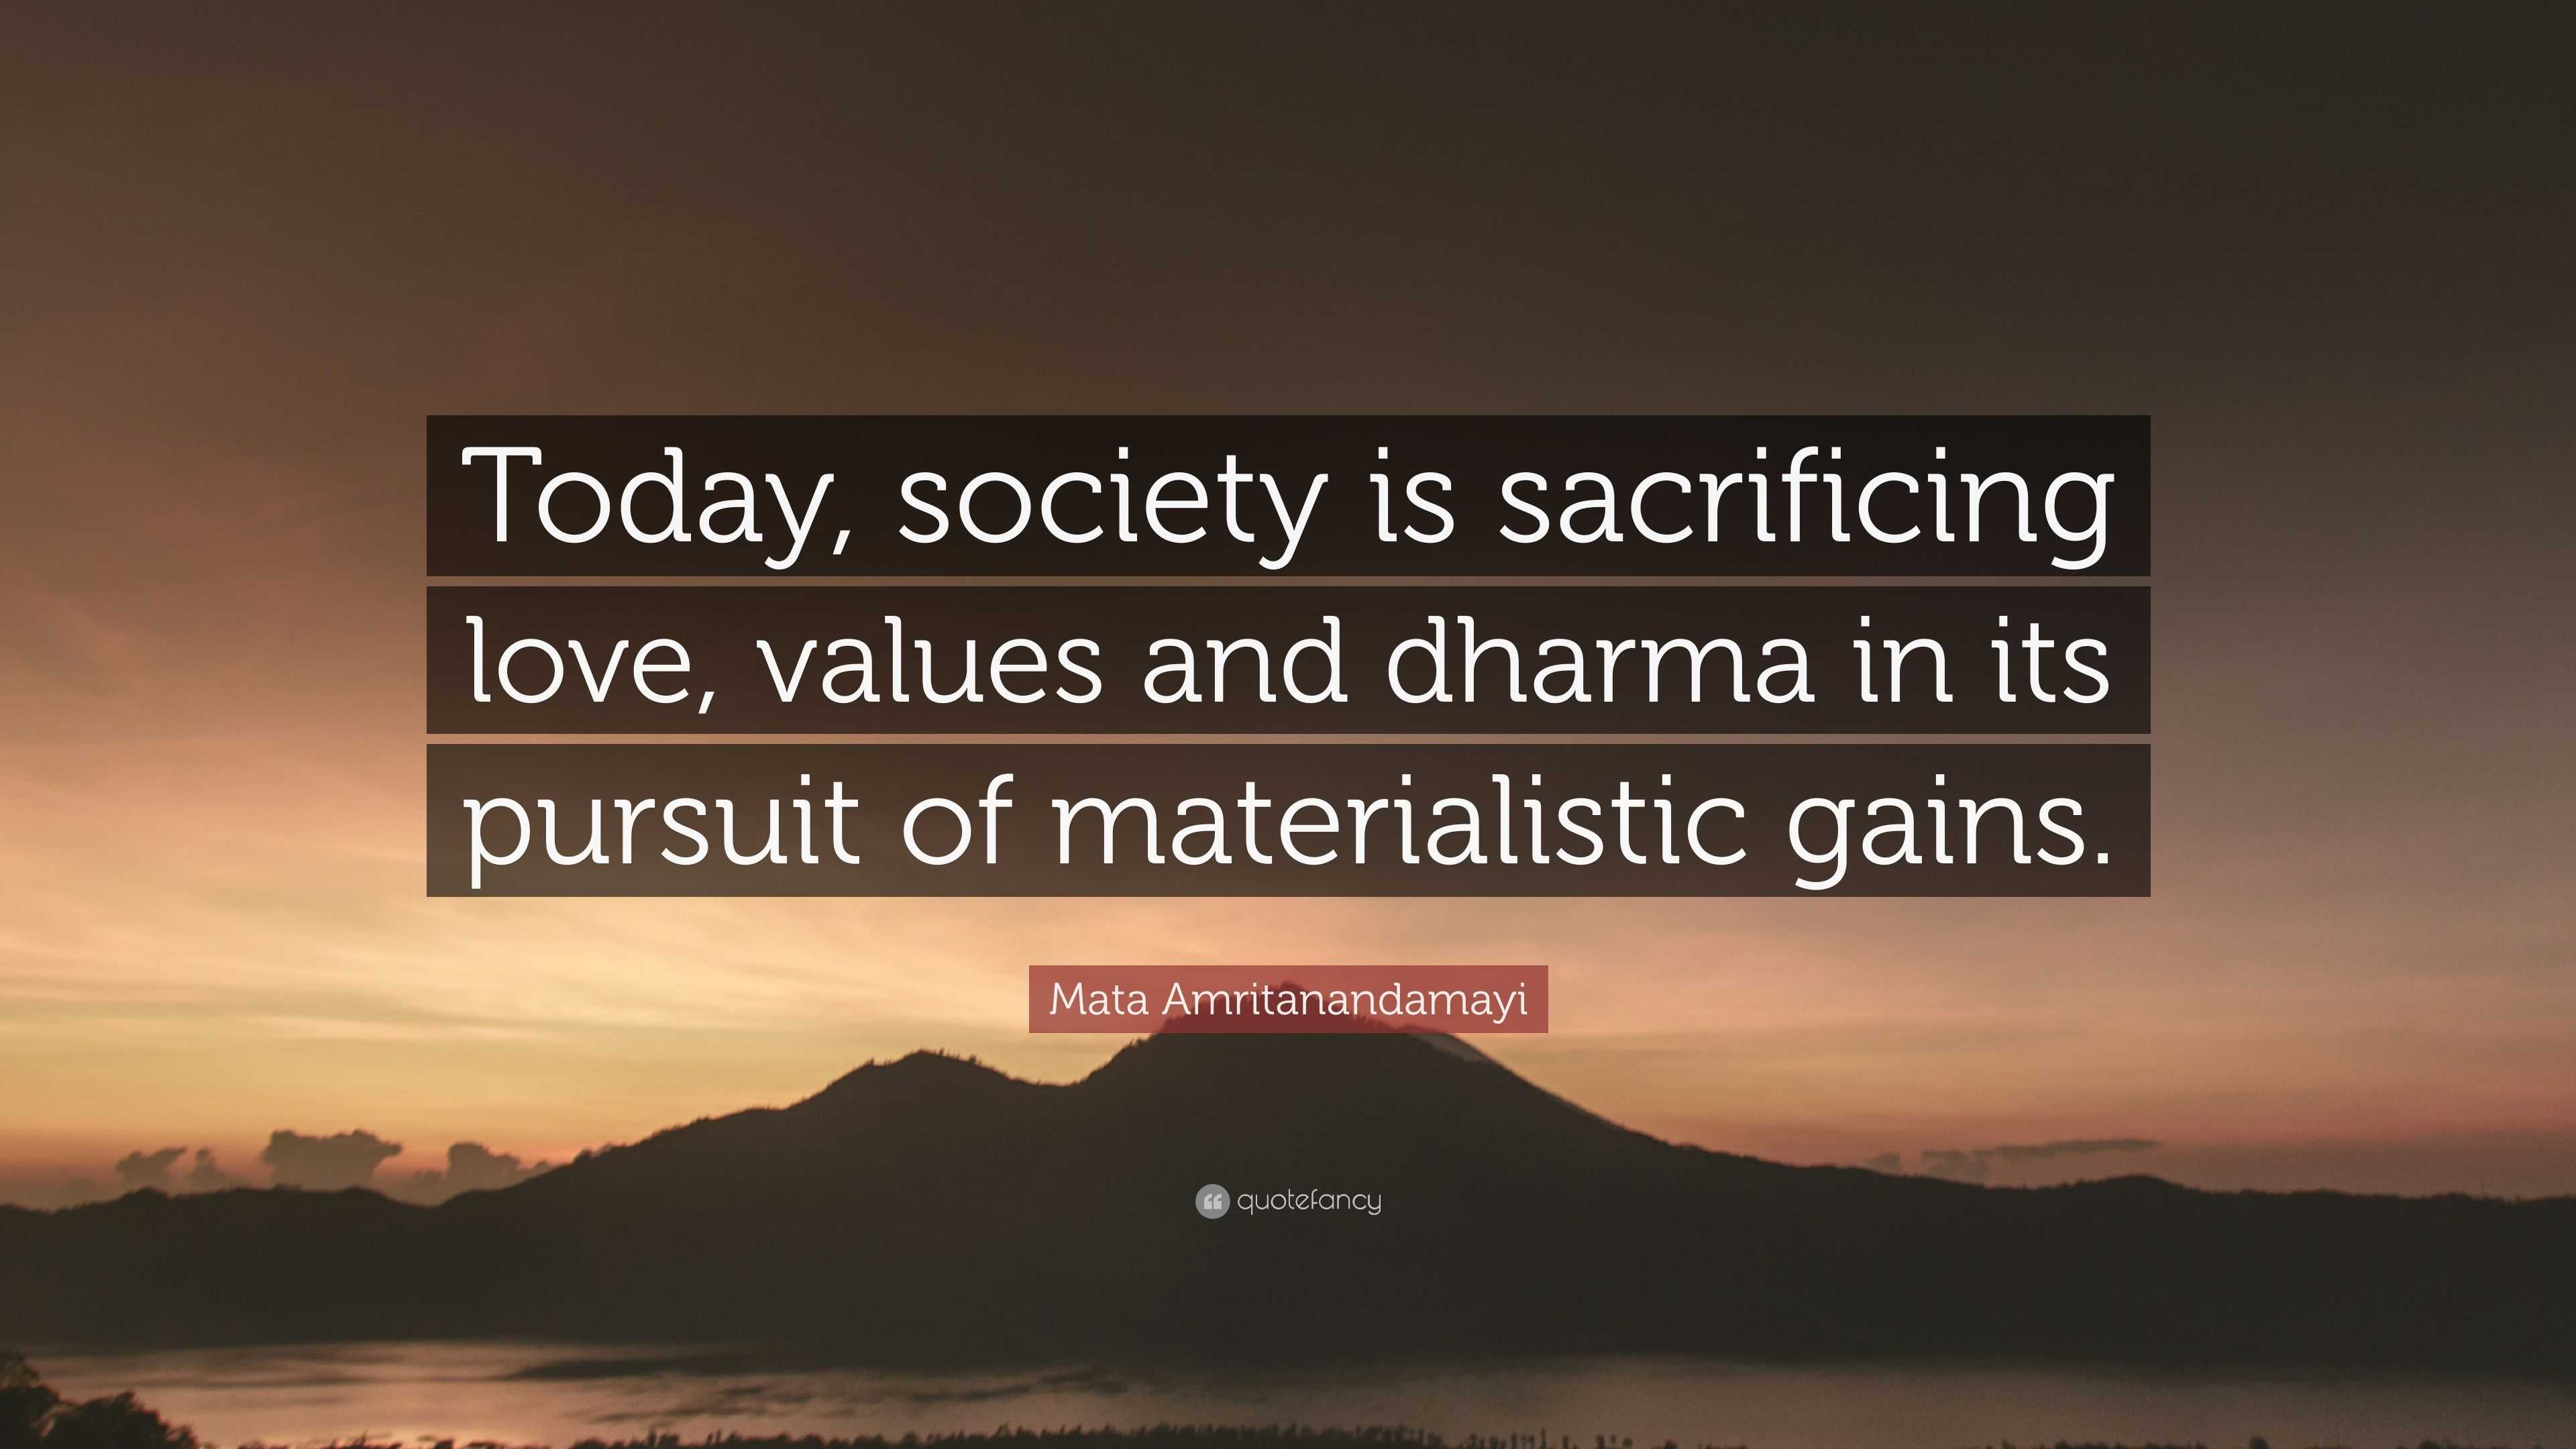 Mata Amritanandamayi Quote: “Today, society is sacrificing love, values